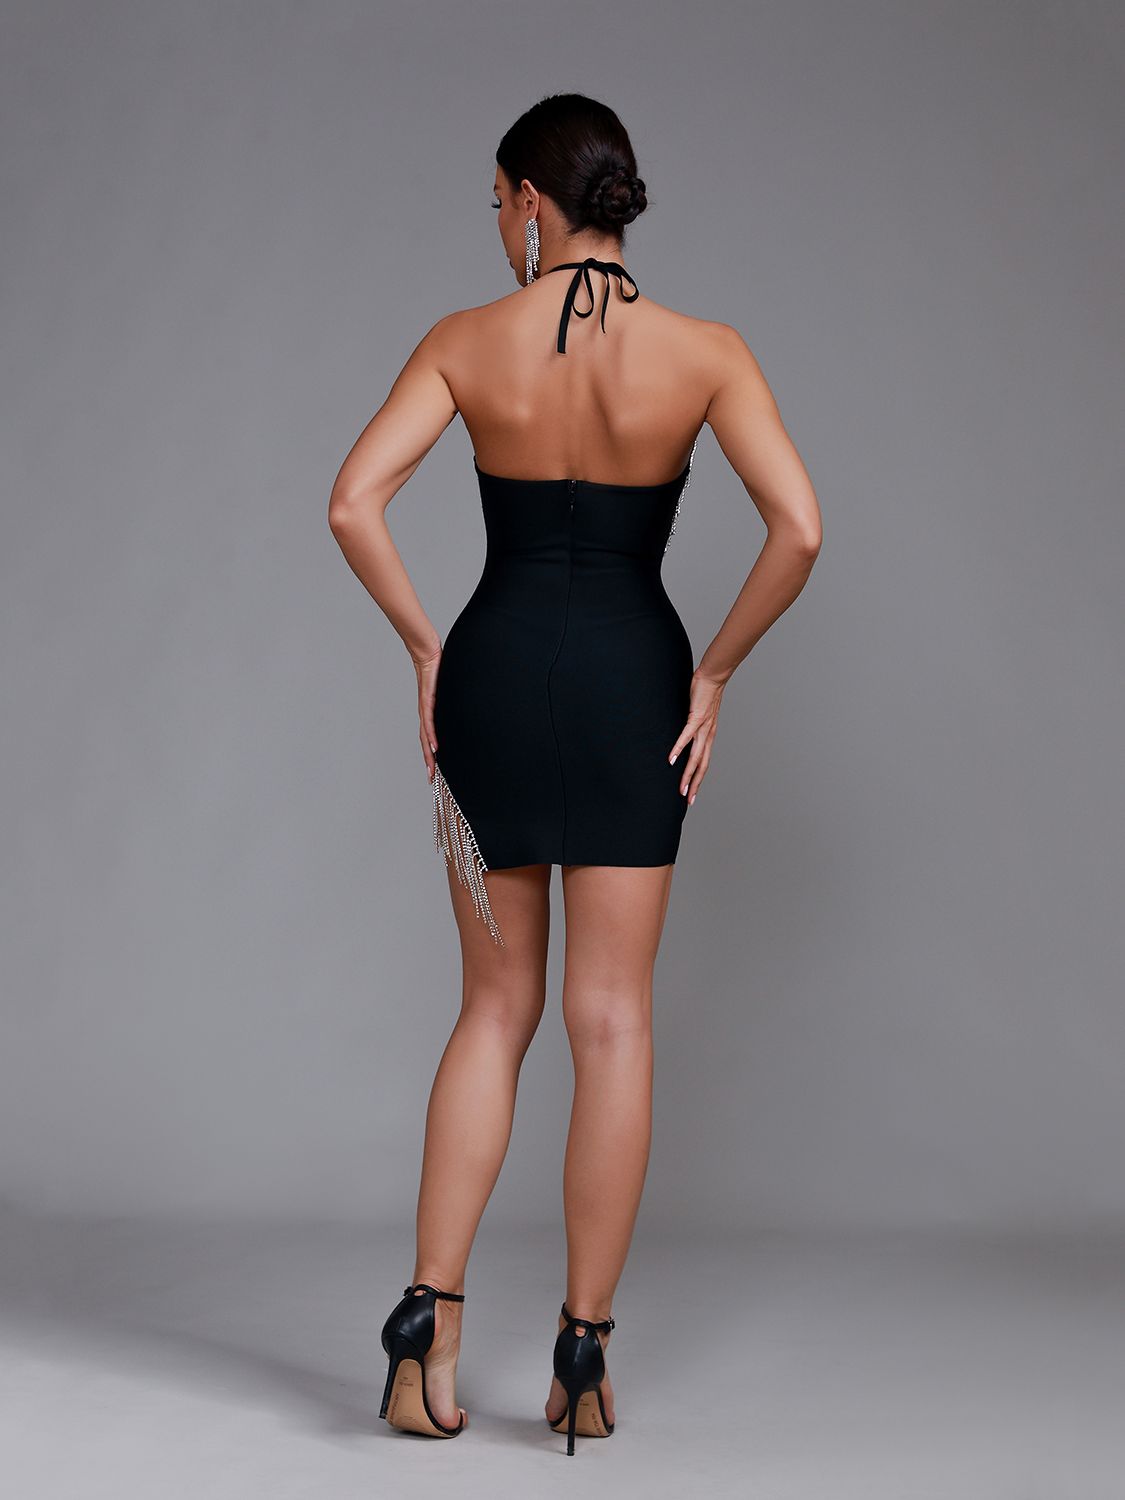 Black Bandage Dress Women Luxury Party Dress Bodycon Elegant Mini Sexy Halter Backless Evening Birthday Club Outfits Summer